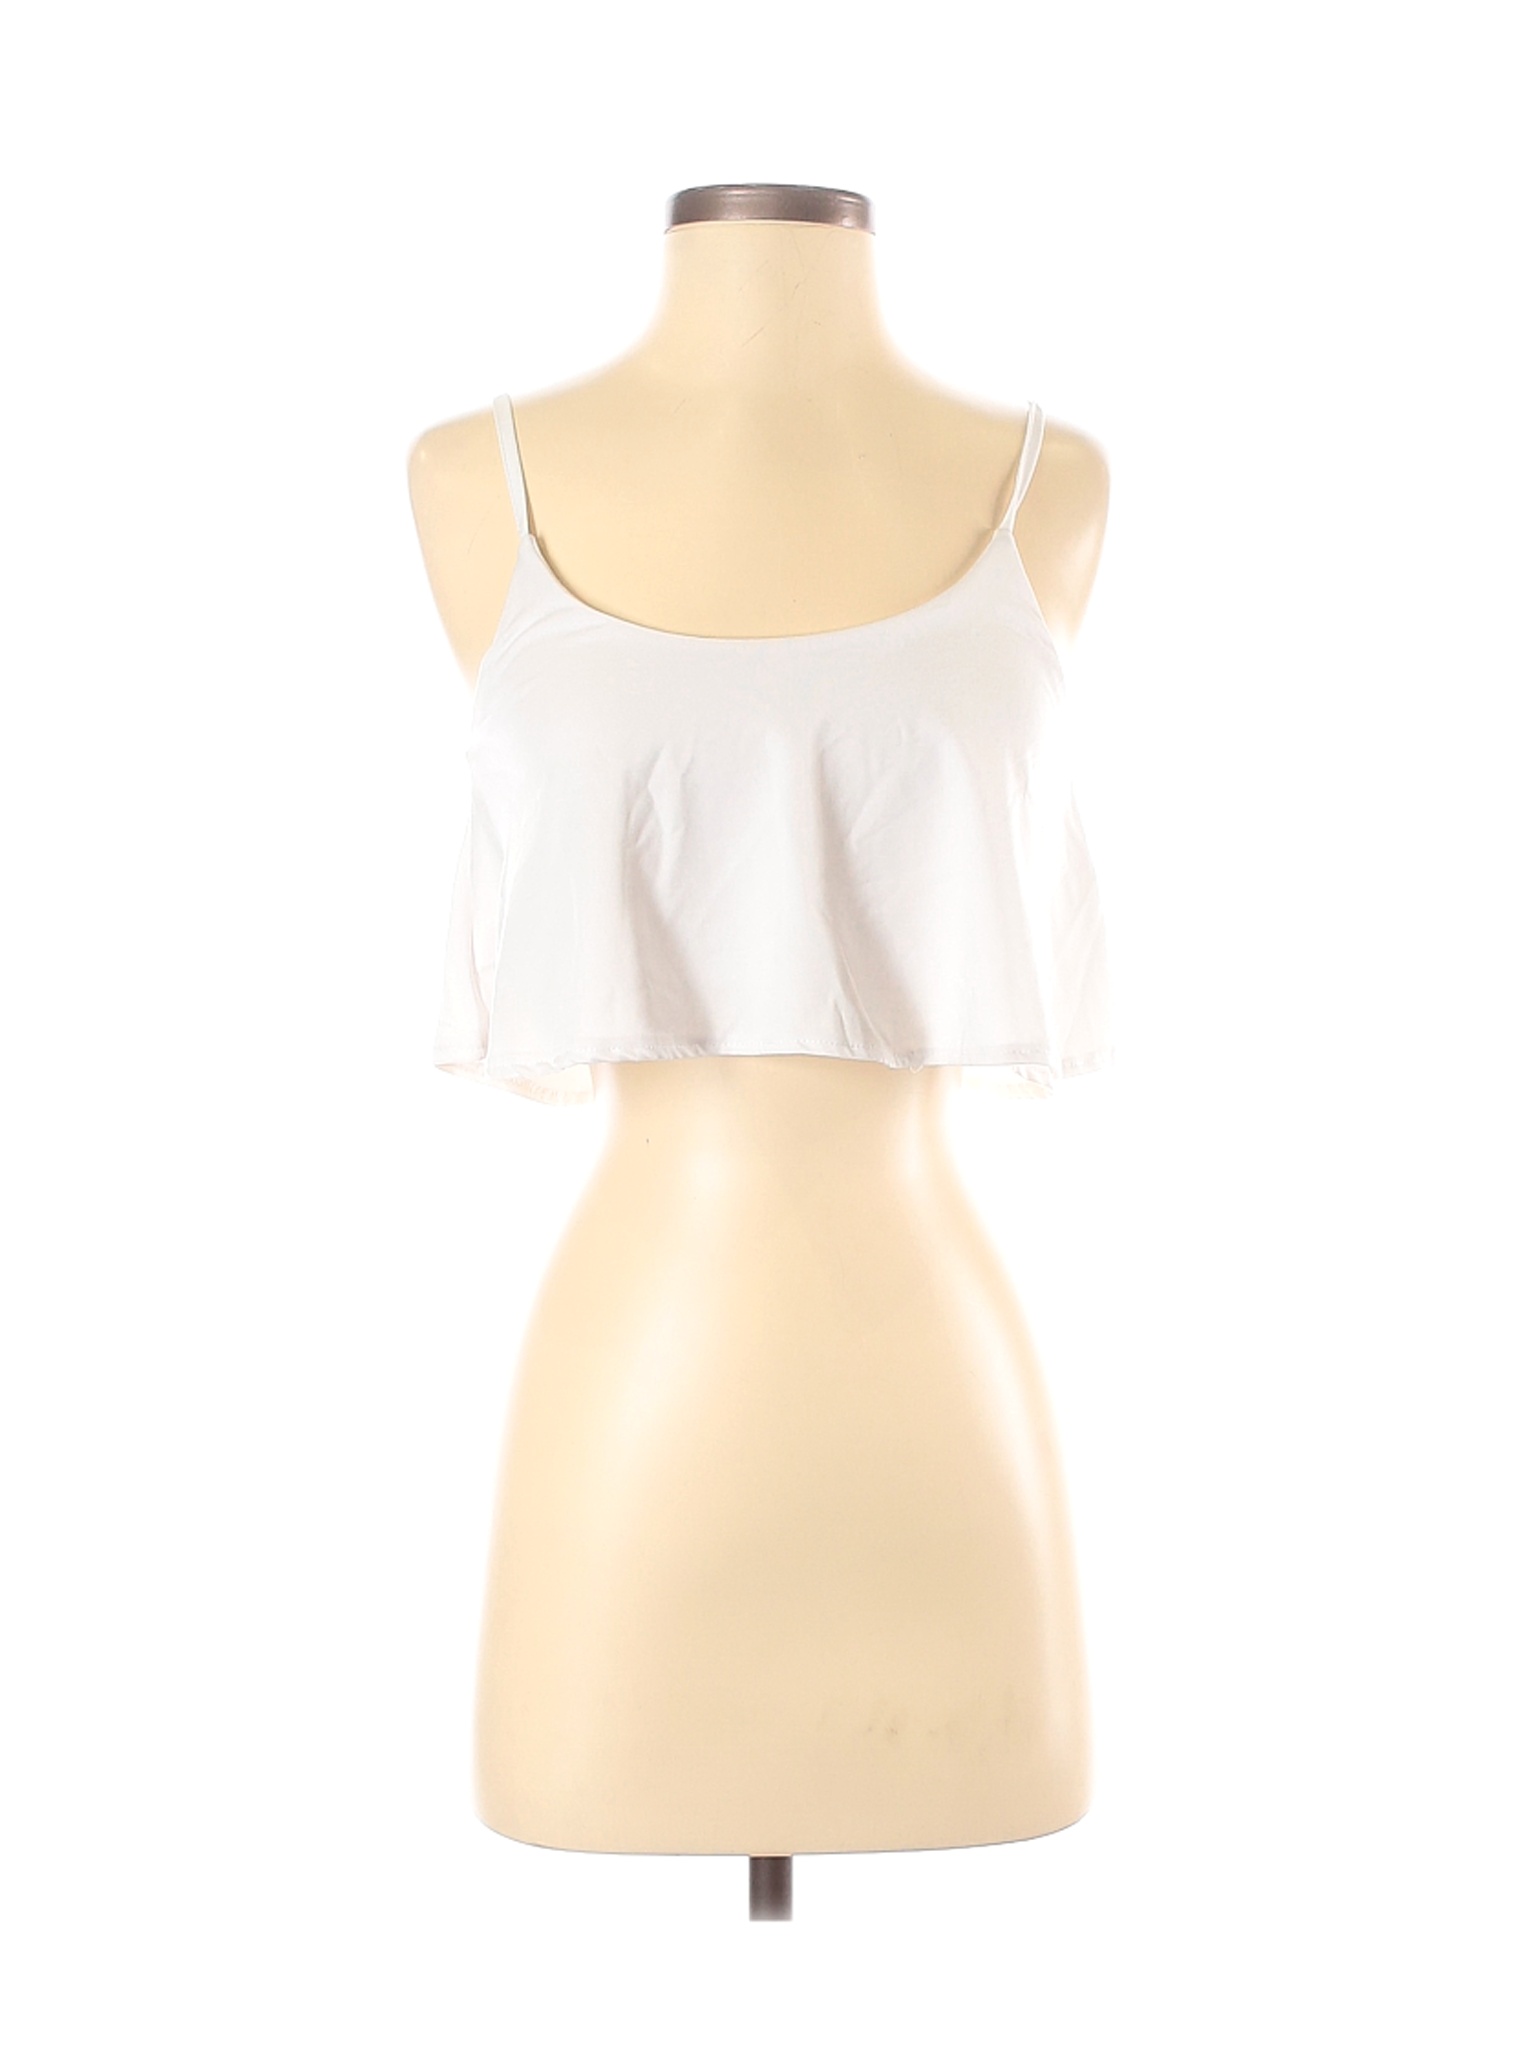 Trafaluc by Zara Women White Tank Top S | eBay